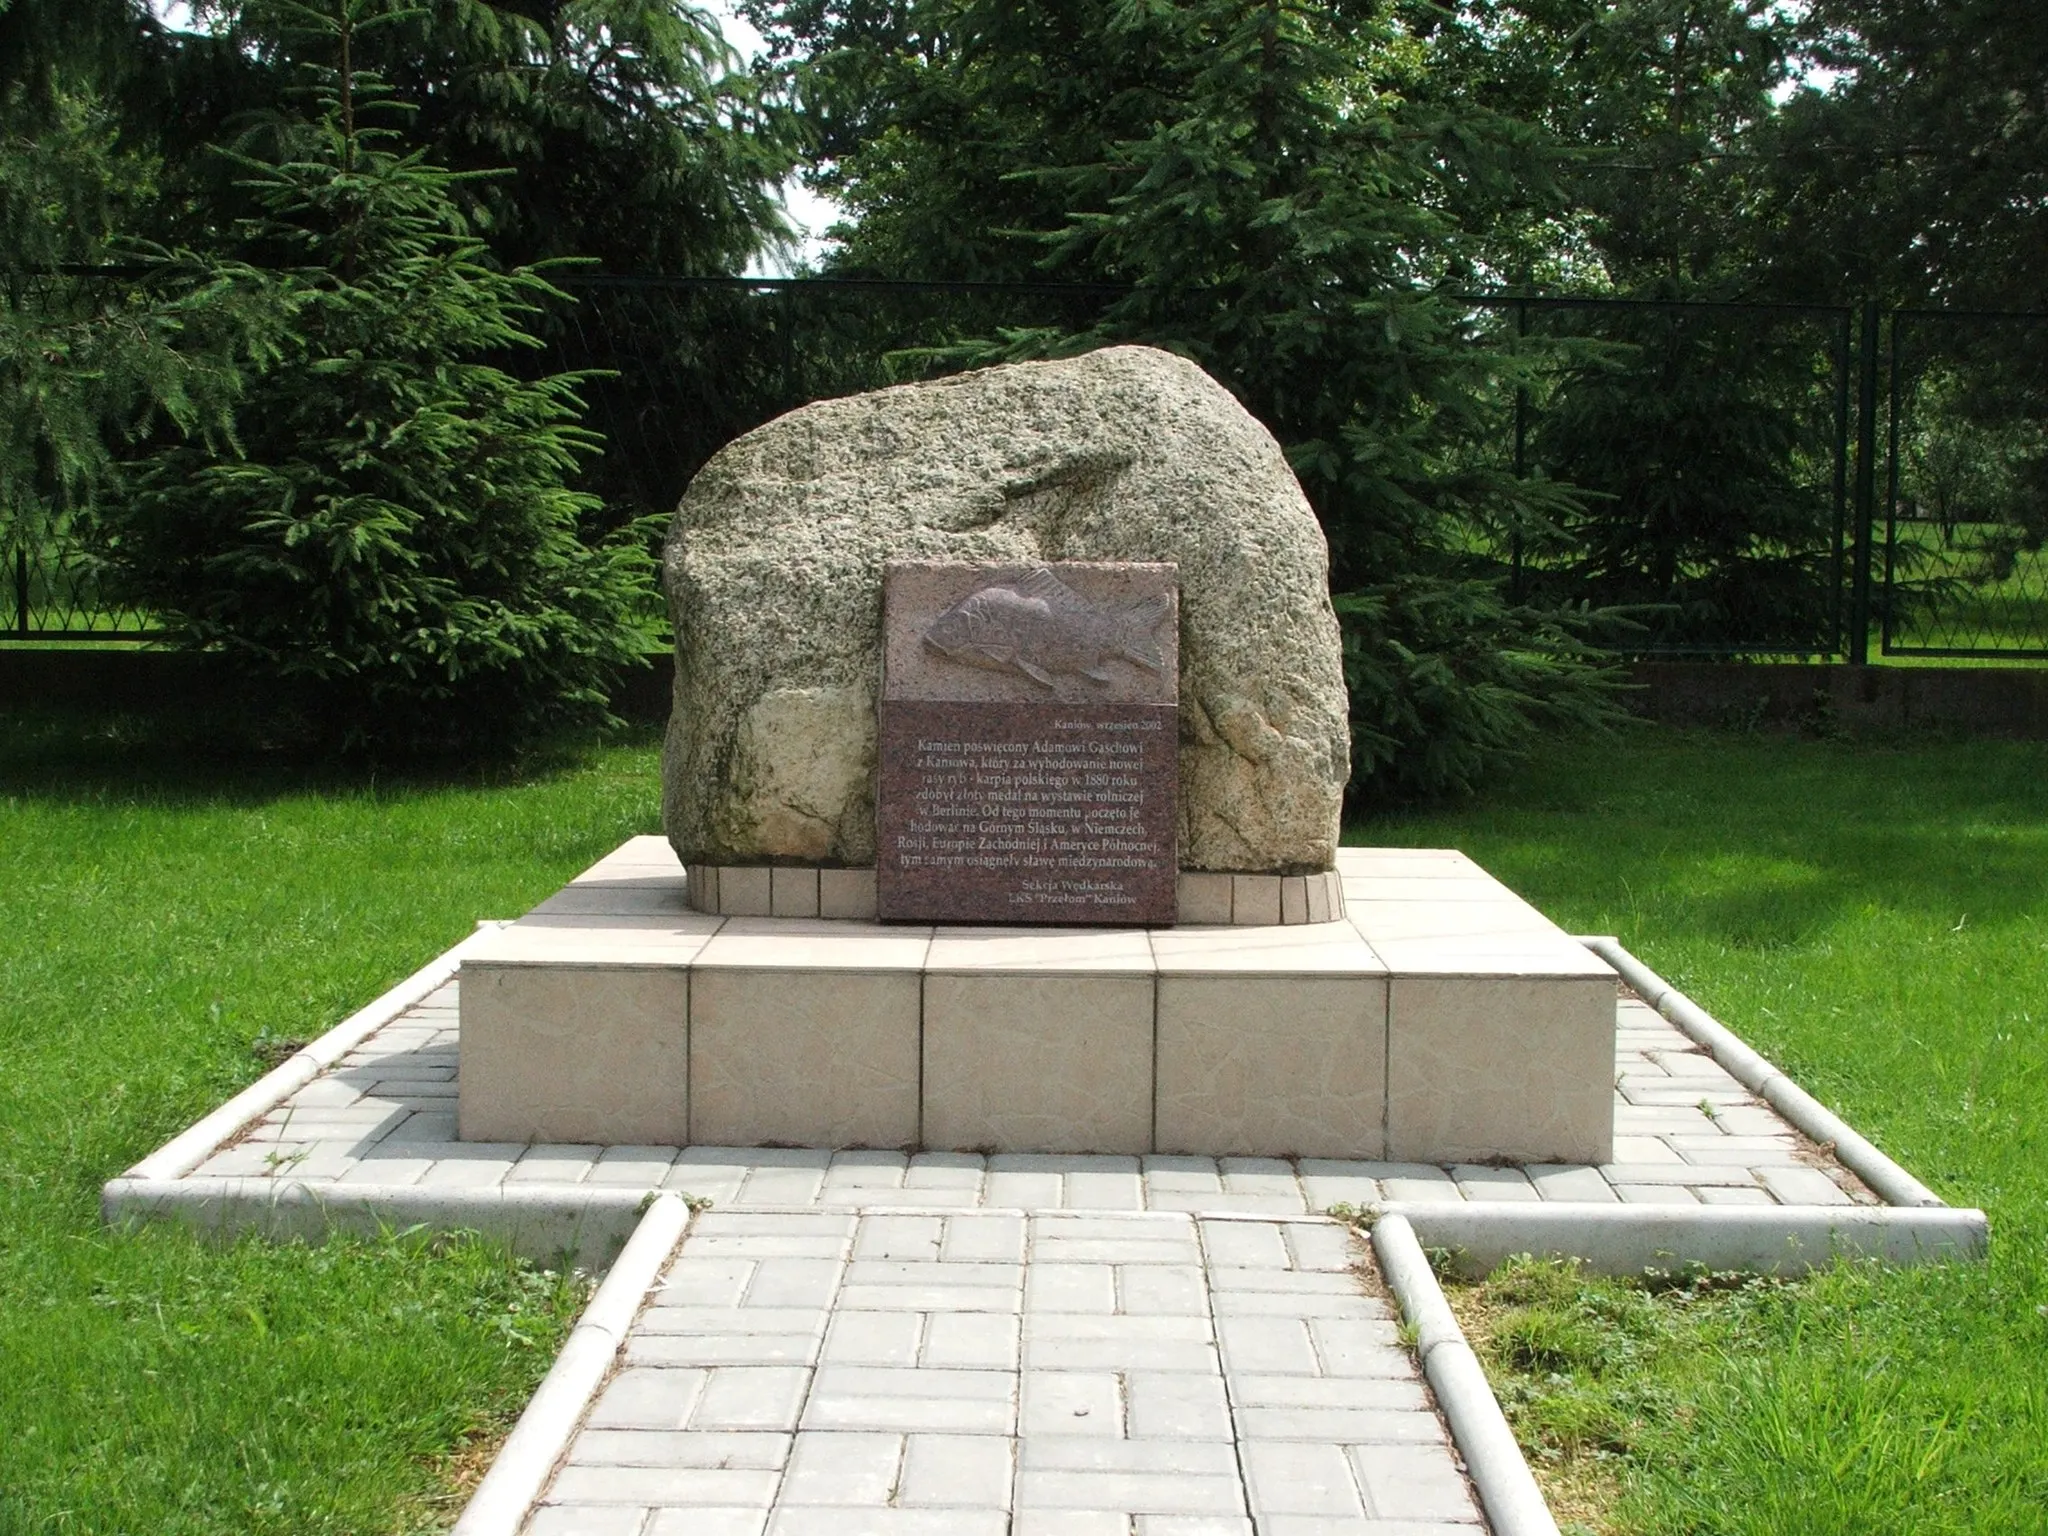 Photo showing: The Statue of Adam Gash, Kaniów, Poland.